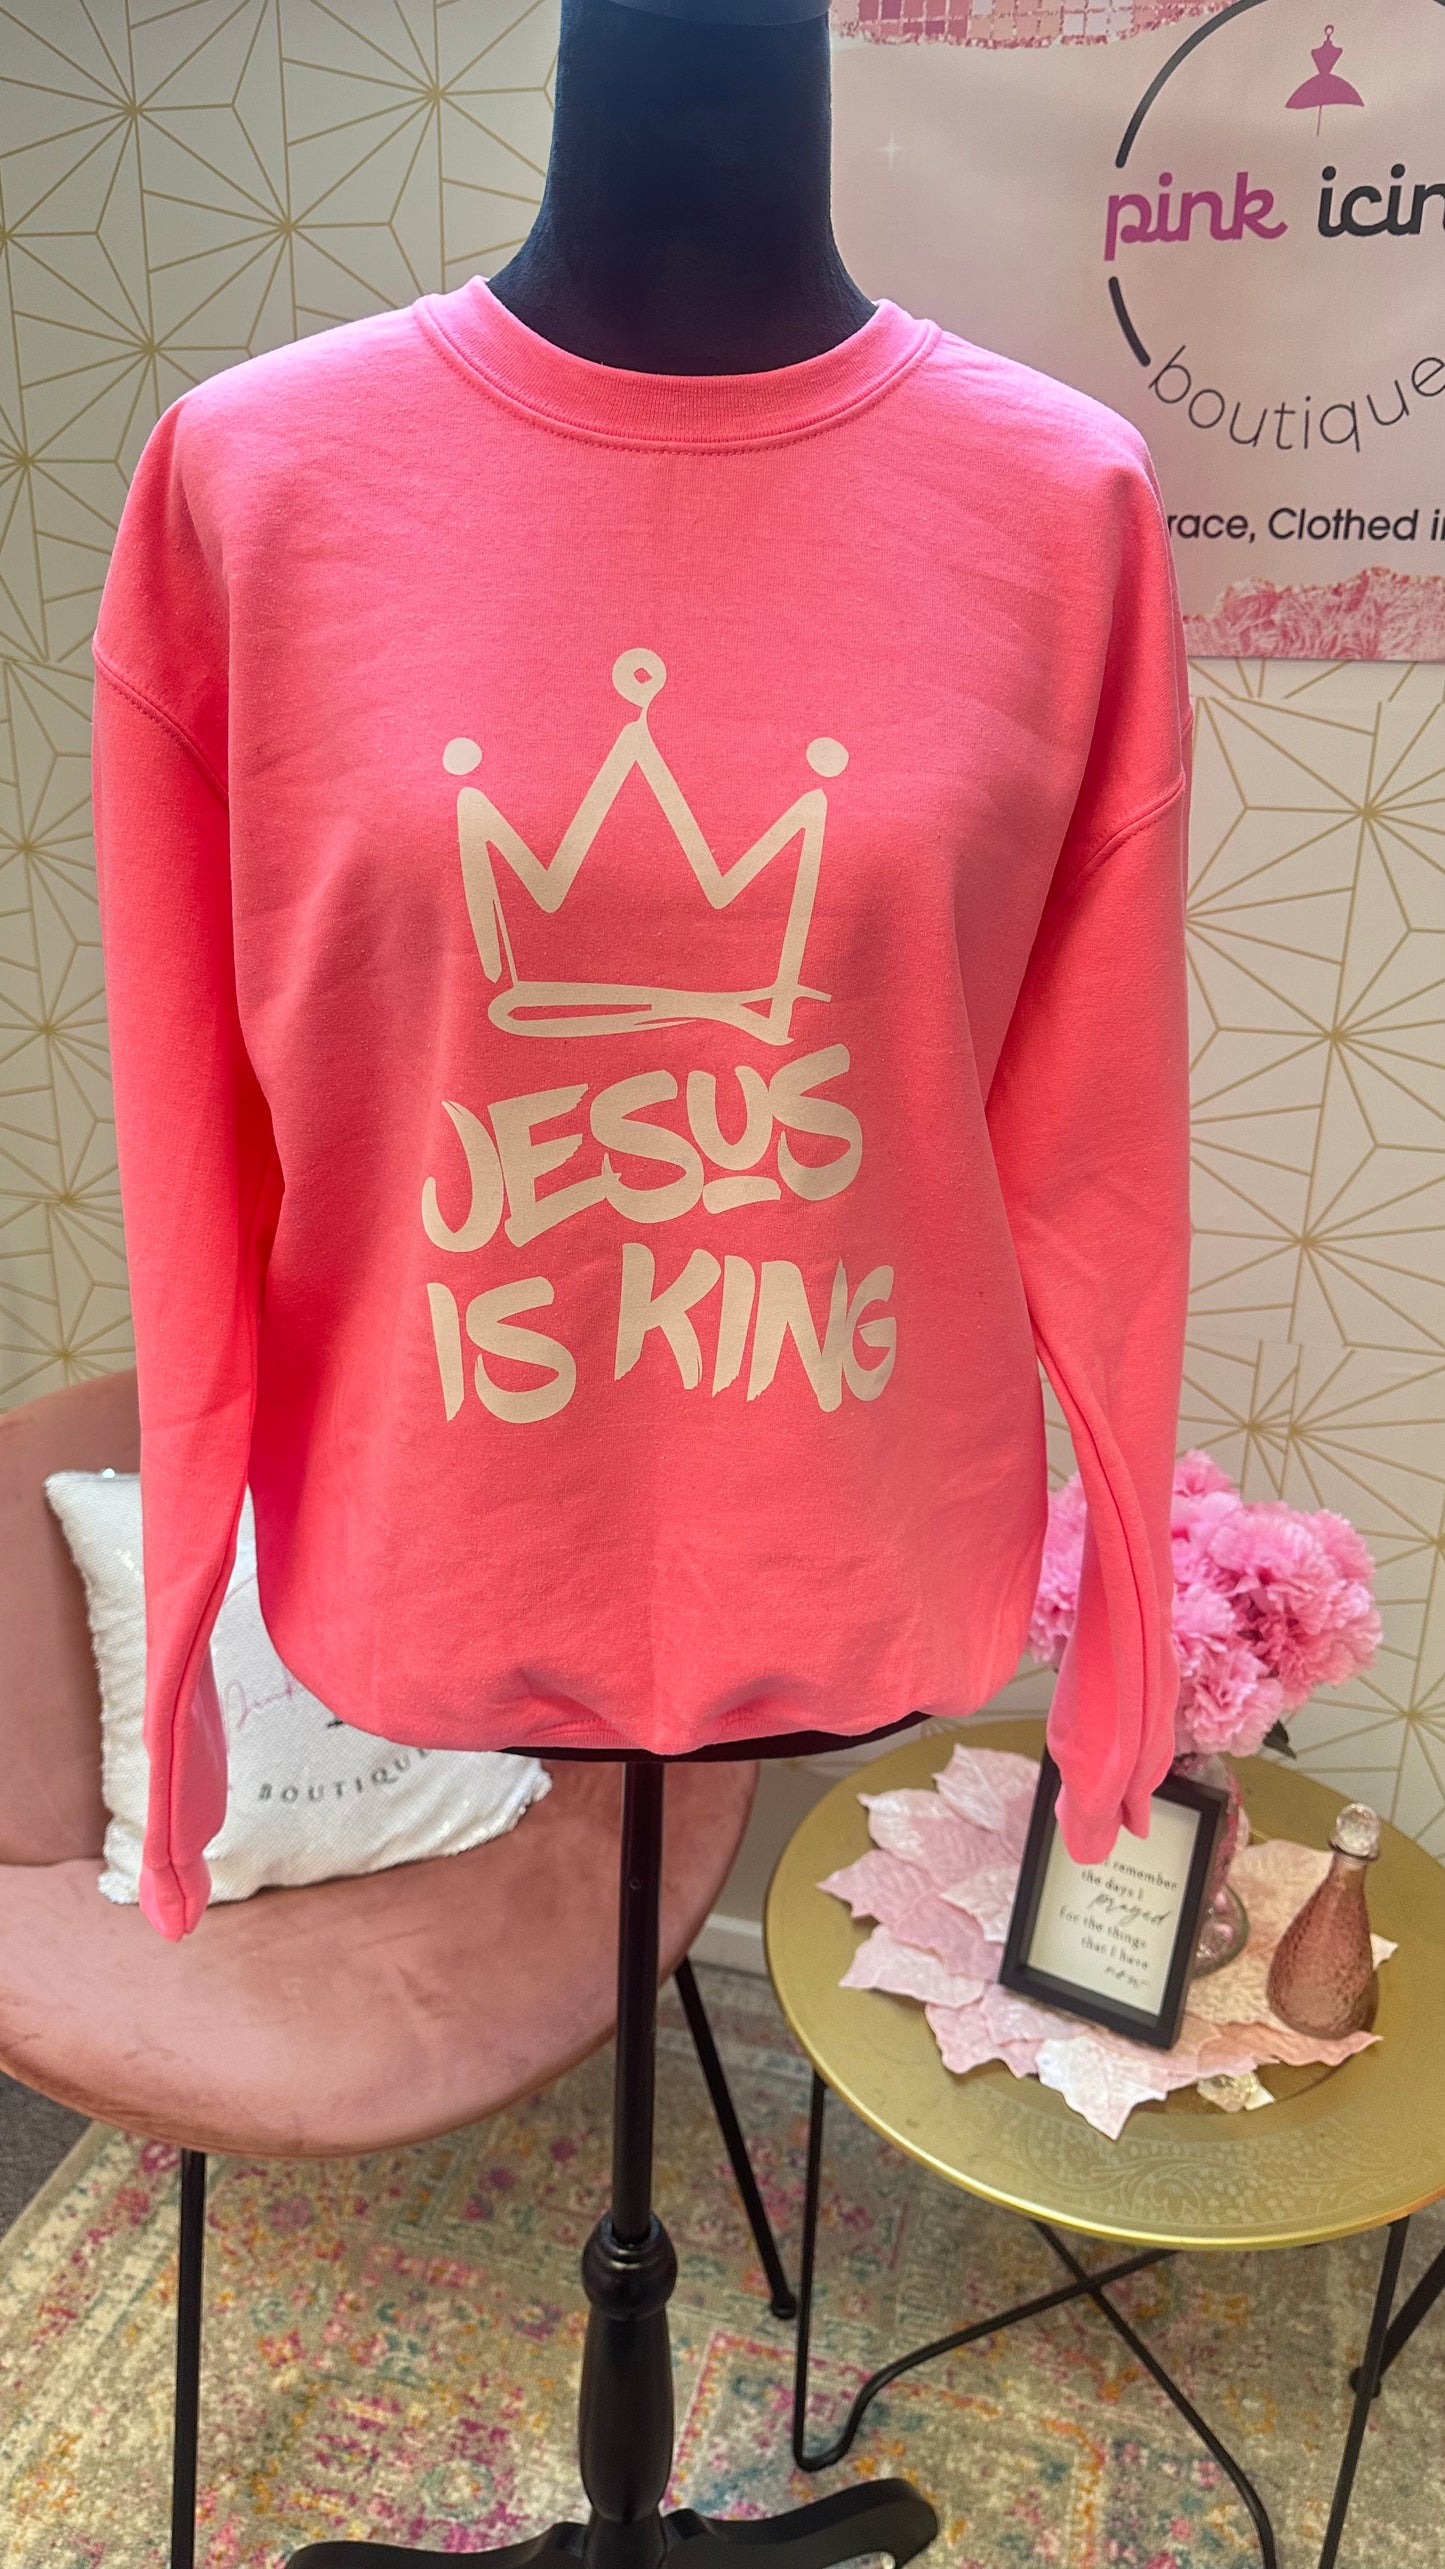 The Jesus is King Sweatshirt